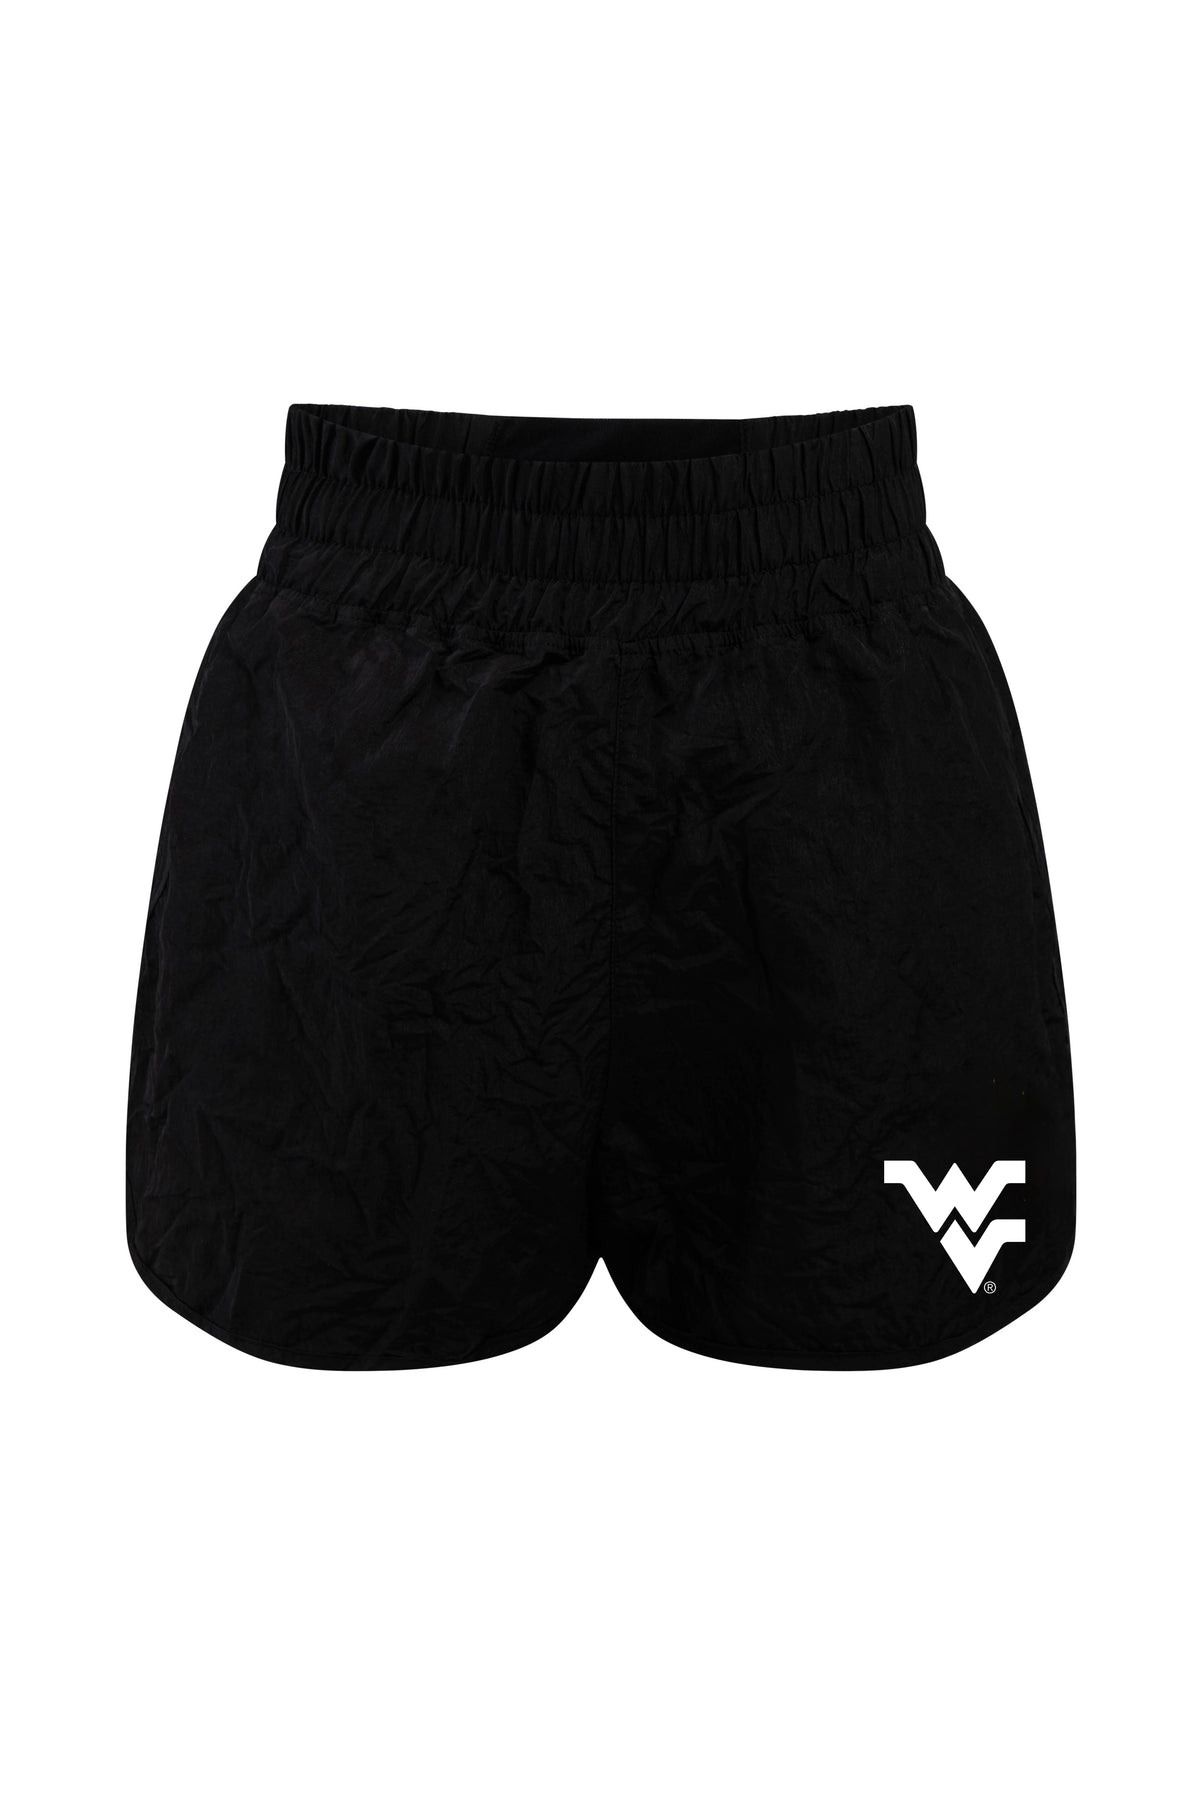 West Virginia University Boxer Short